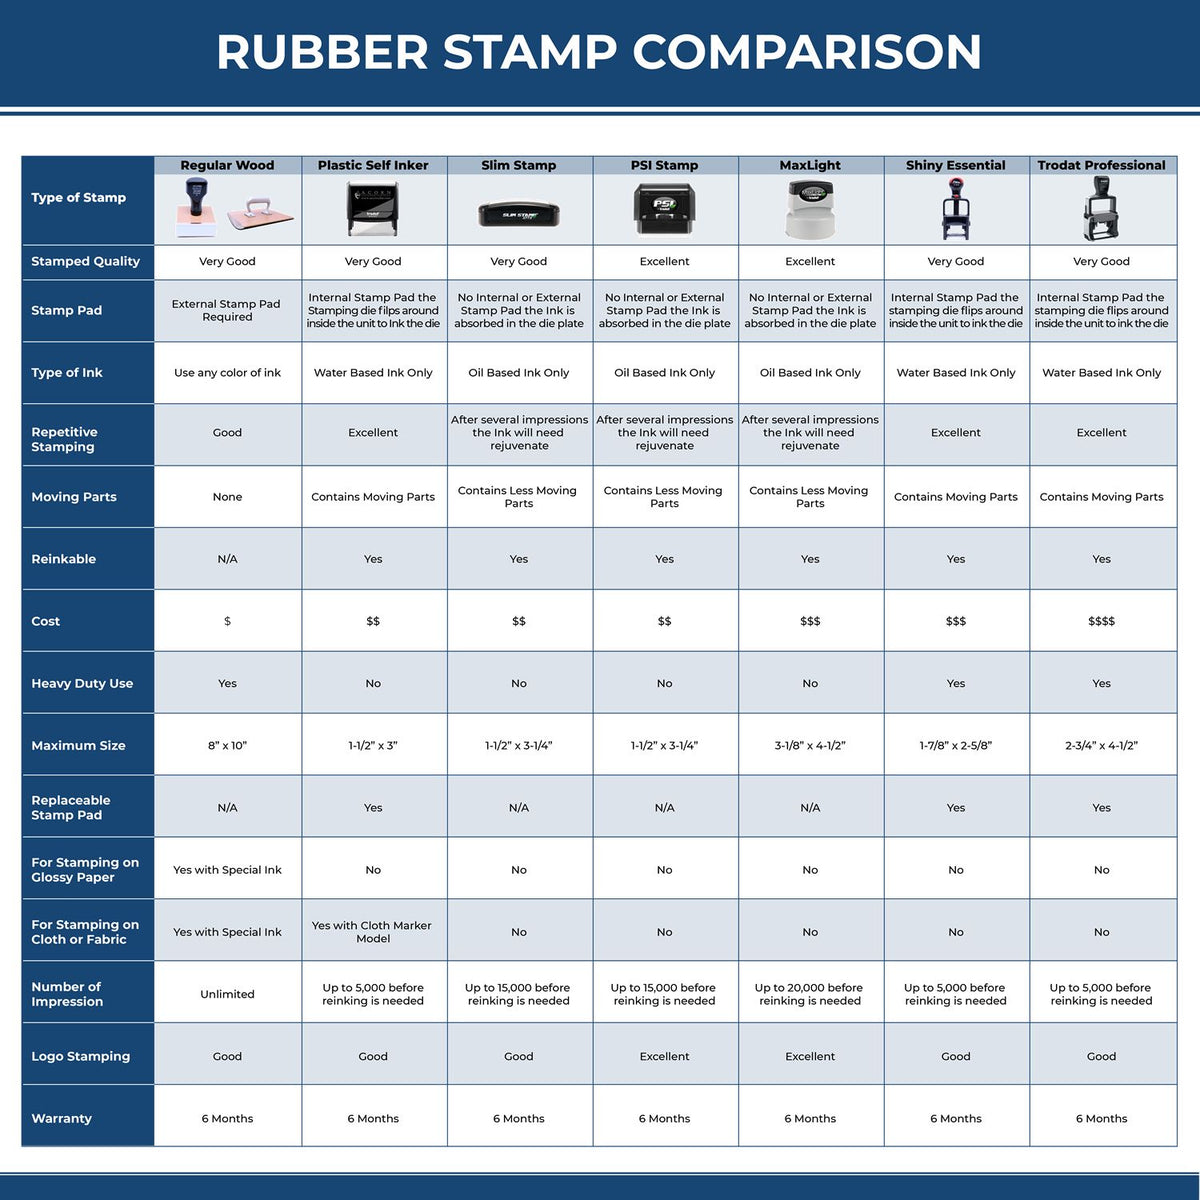 Real Estate Appraiser Self Inking Rubber Stamp of Seal 3006REA Rubber Stamp Comparison